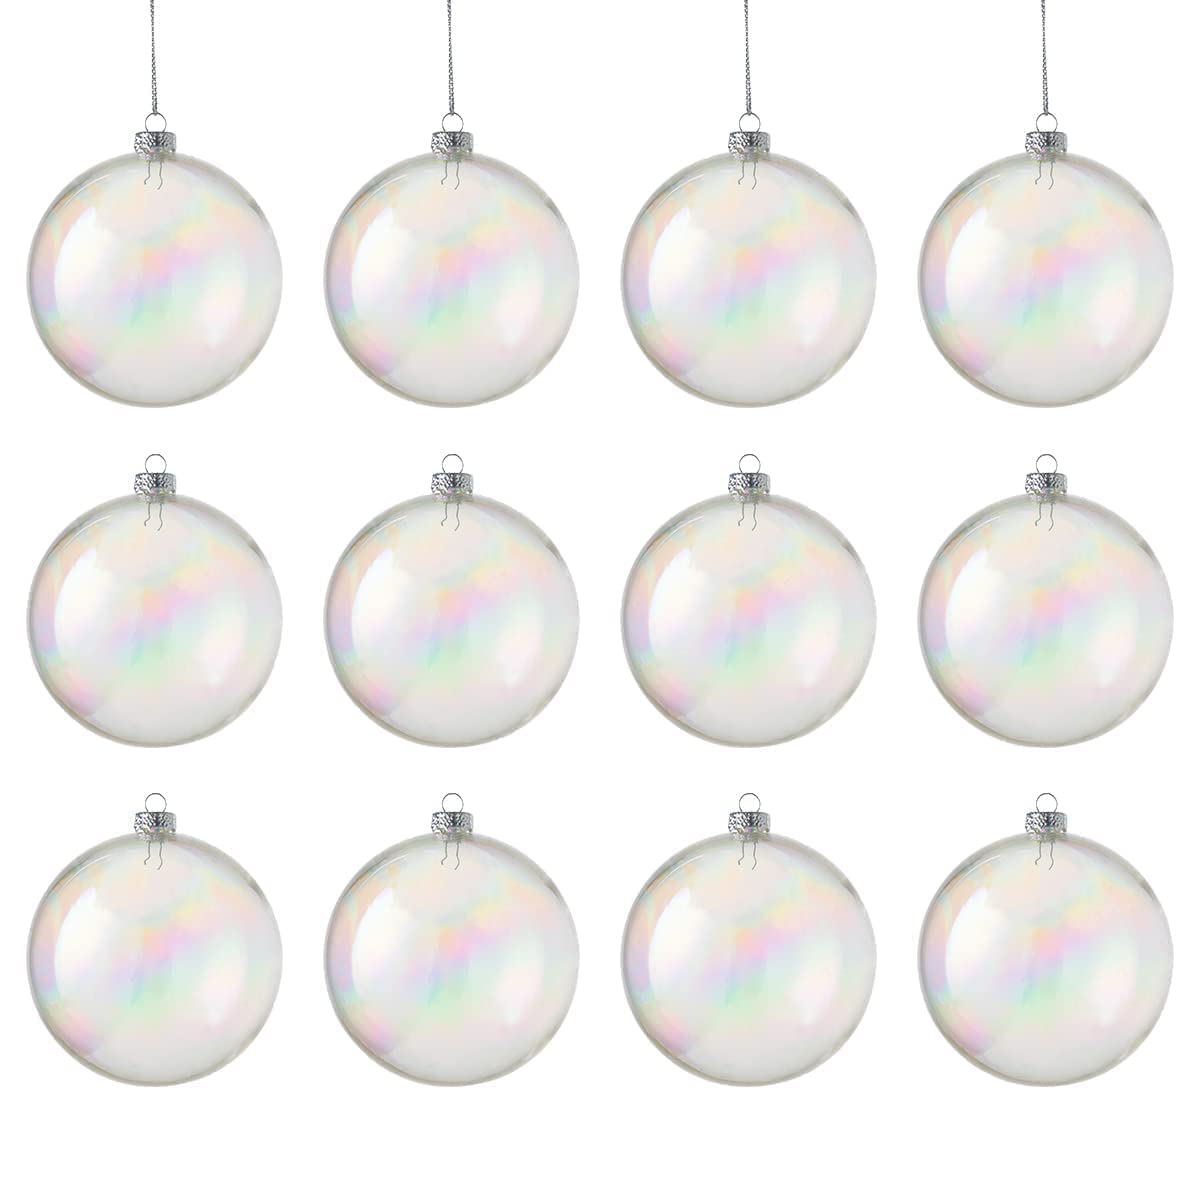 3.5'' Chrome Christmas Ball Ornaments, 12 Pcs